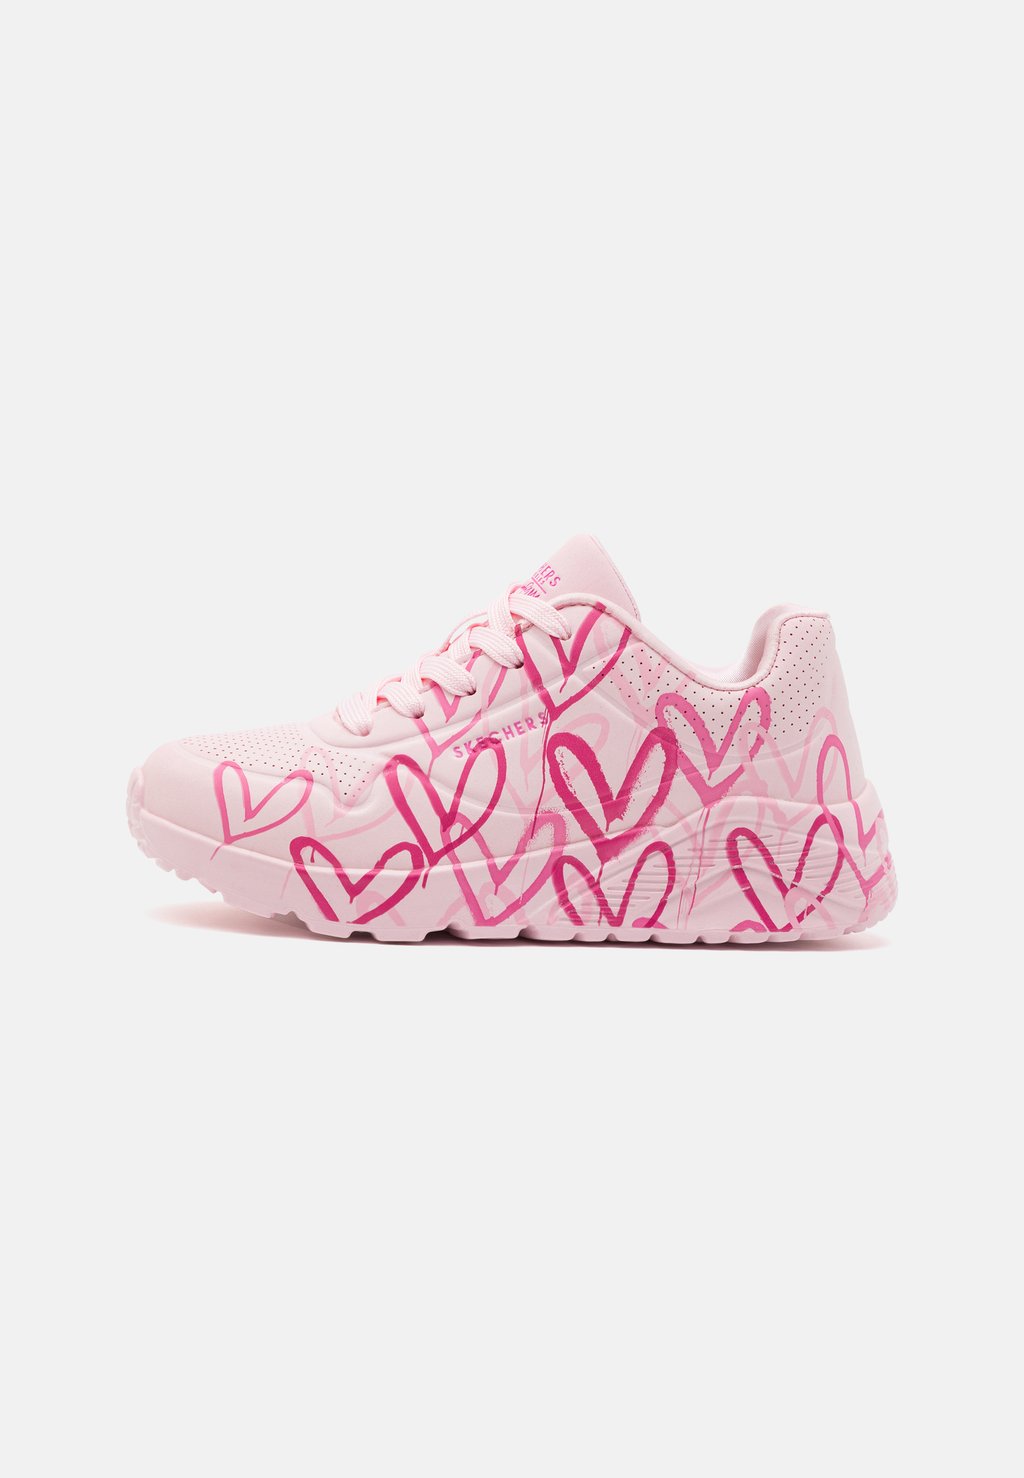 Низкие кроссовки Uno Lite Skechers, цвет light pink/multi pinks кроссовки низкие uno lite skechers sport цвет black multi coloured